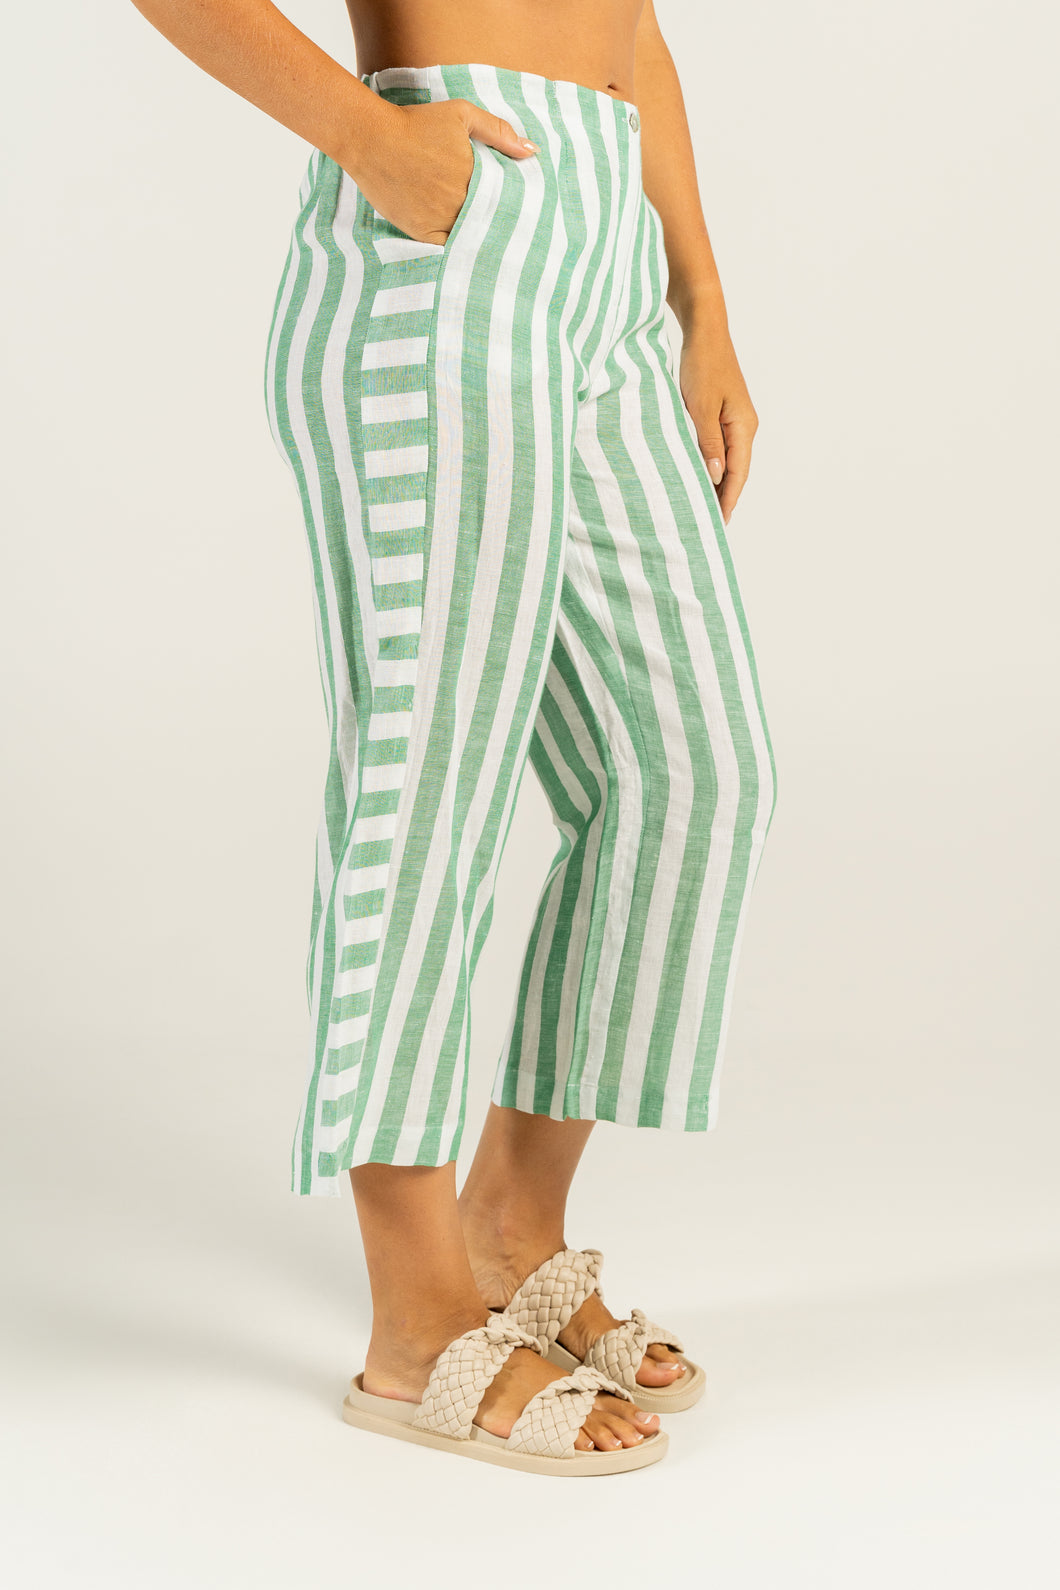 SALE  See Saw   Emerald/White Two-Way Stripe Pant  -  Sizes: 12 14